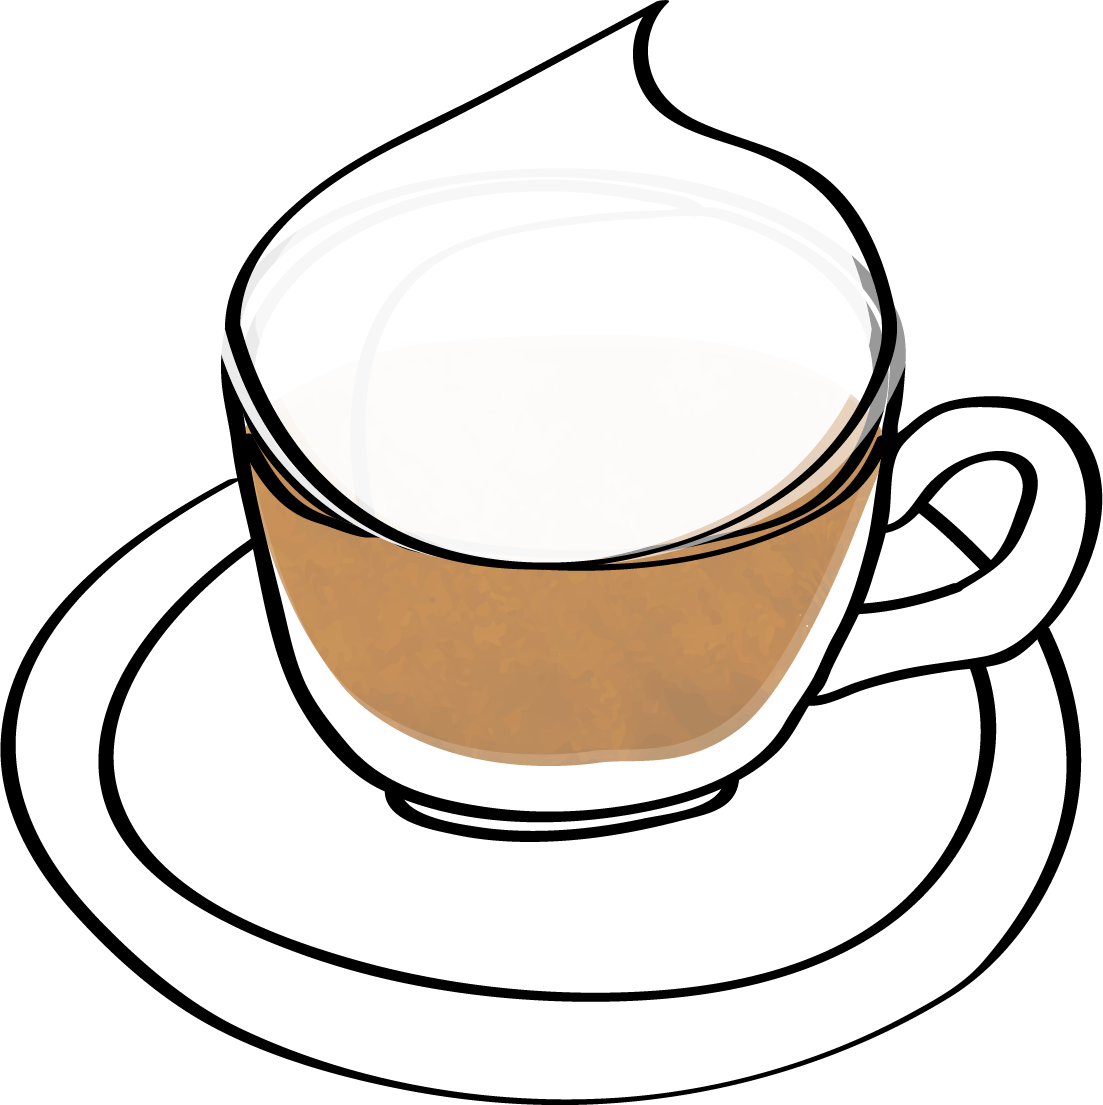 Cappuccino - - Saucer (1103x1105)